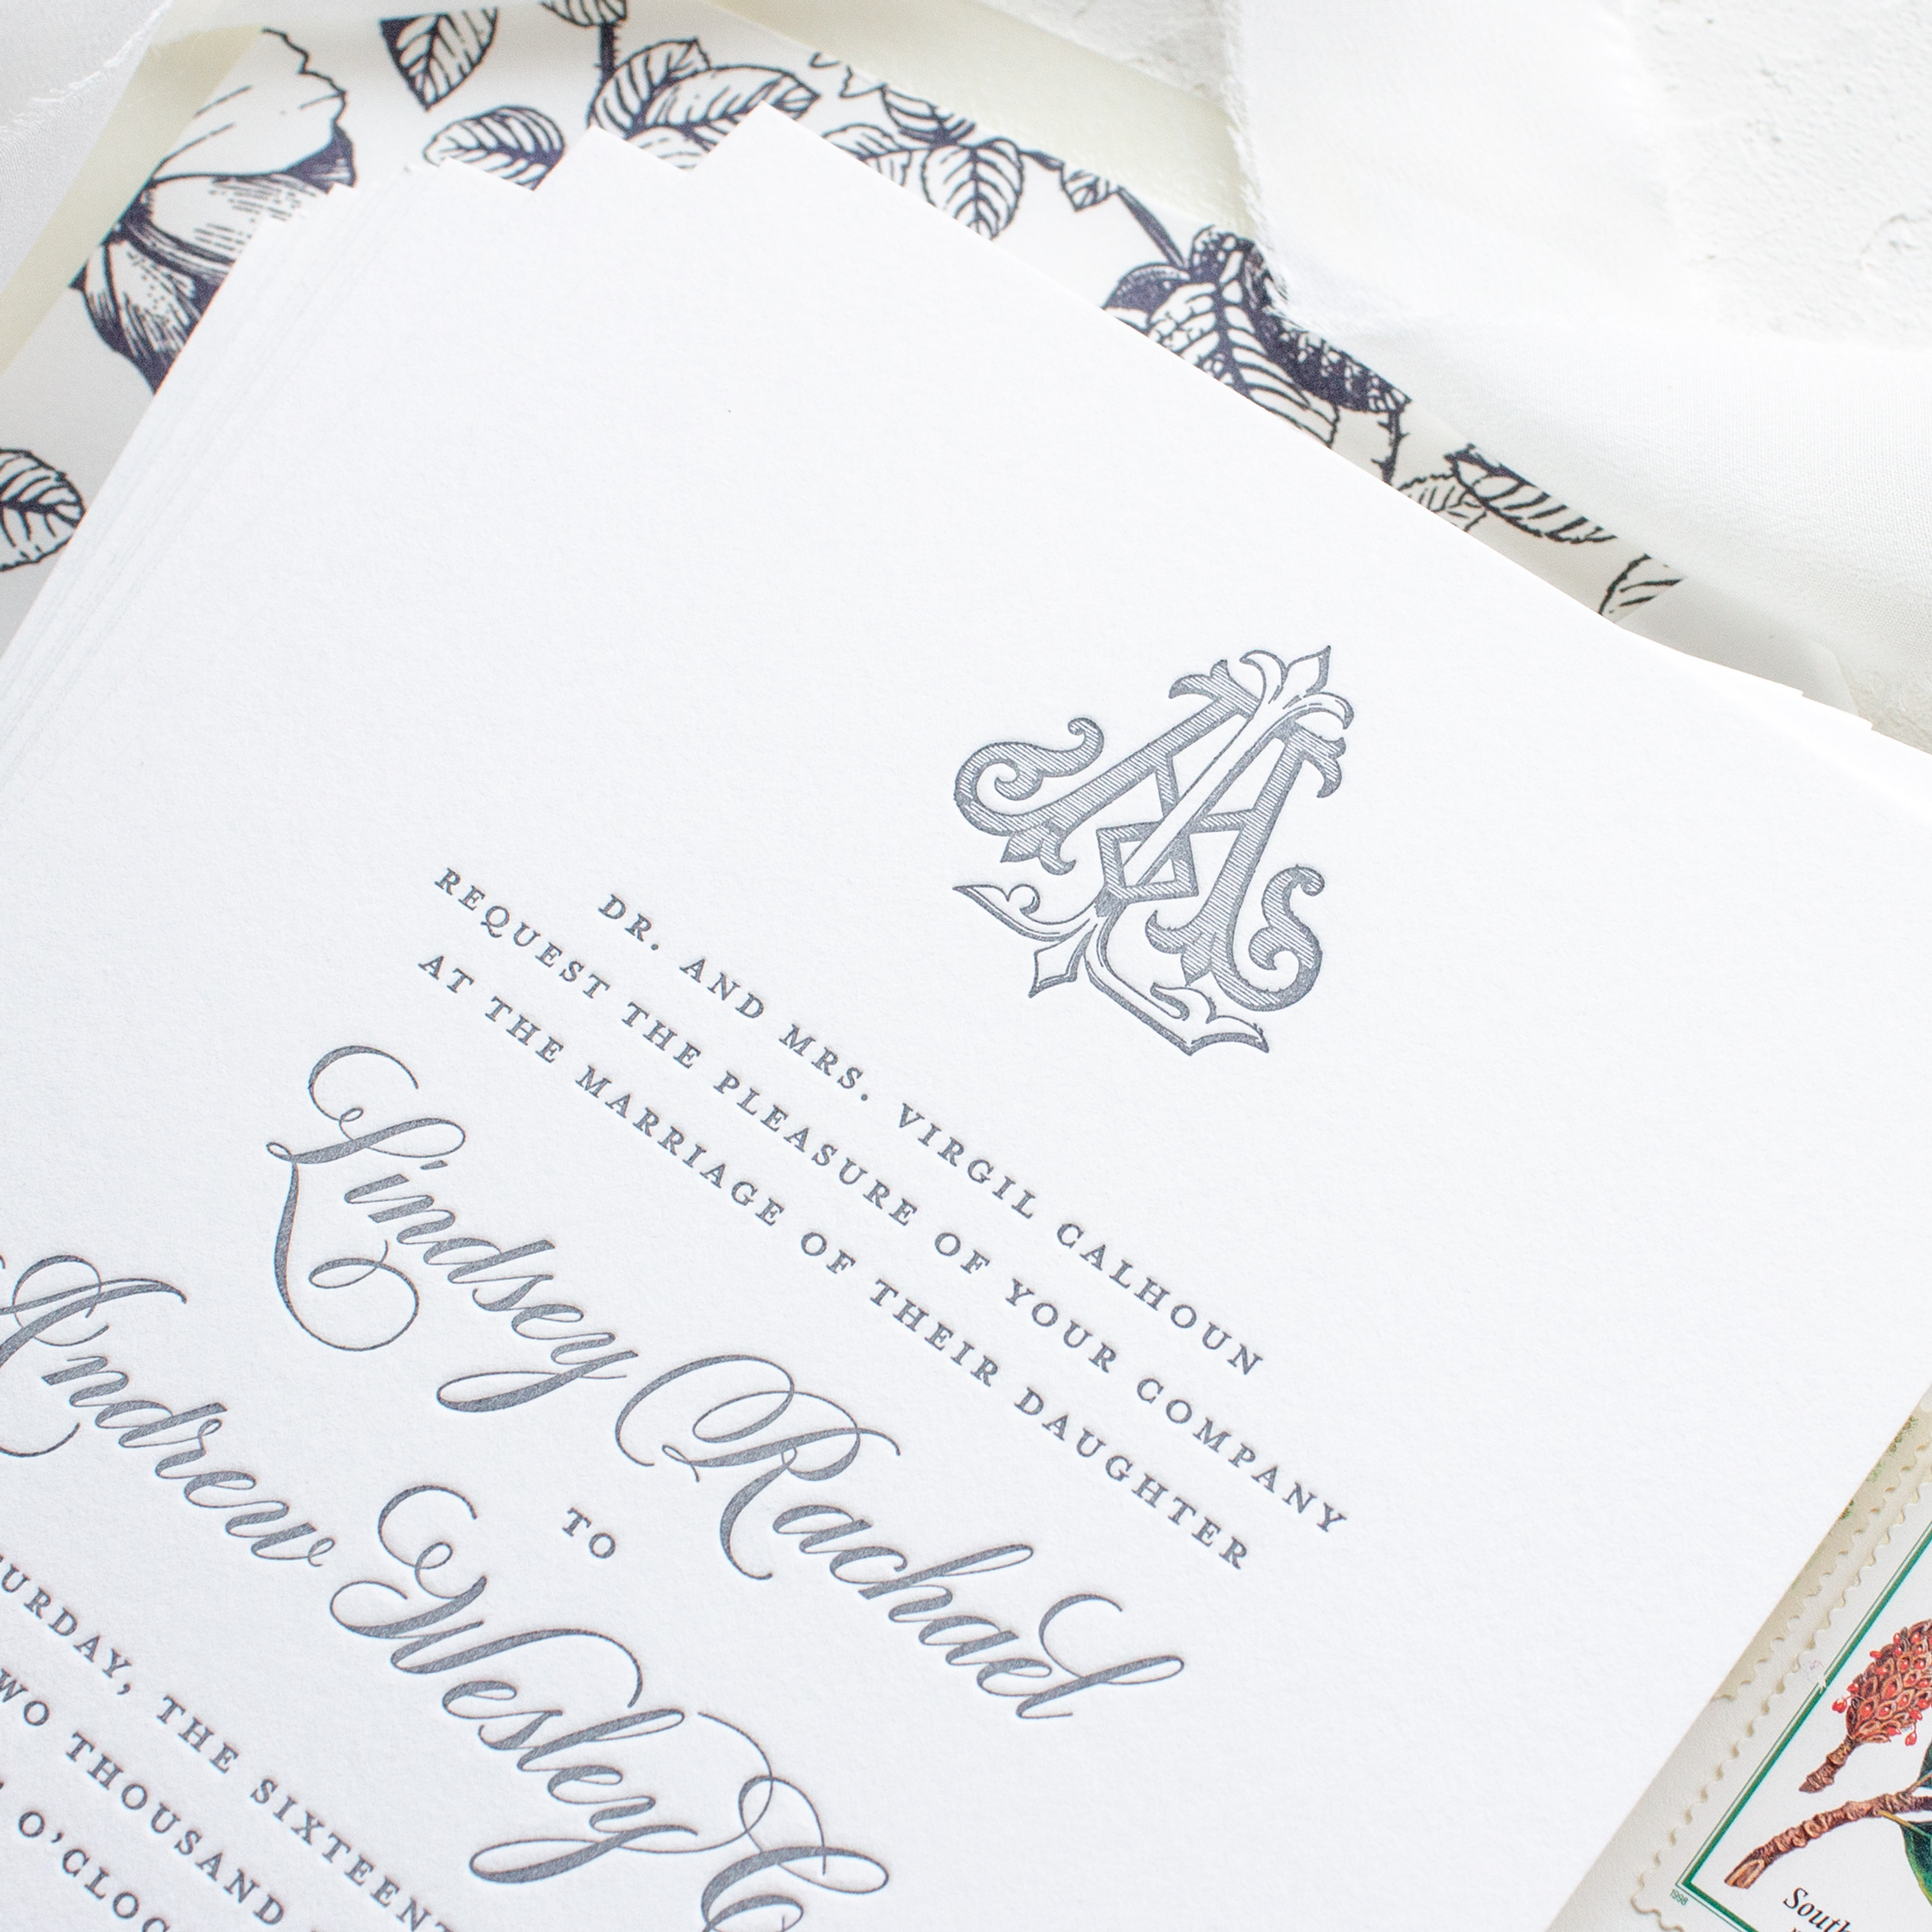 traditional letterpress wedding invitations